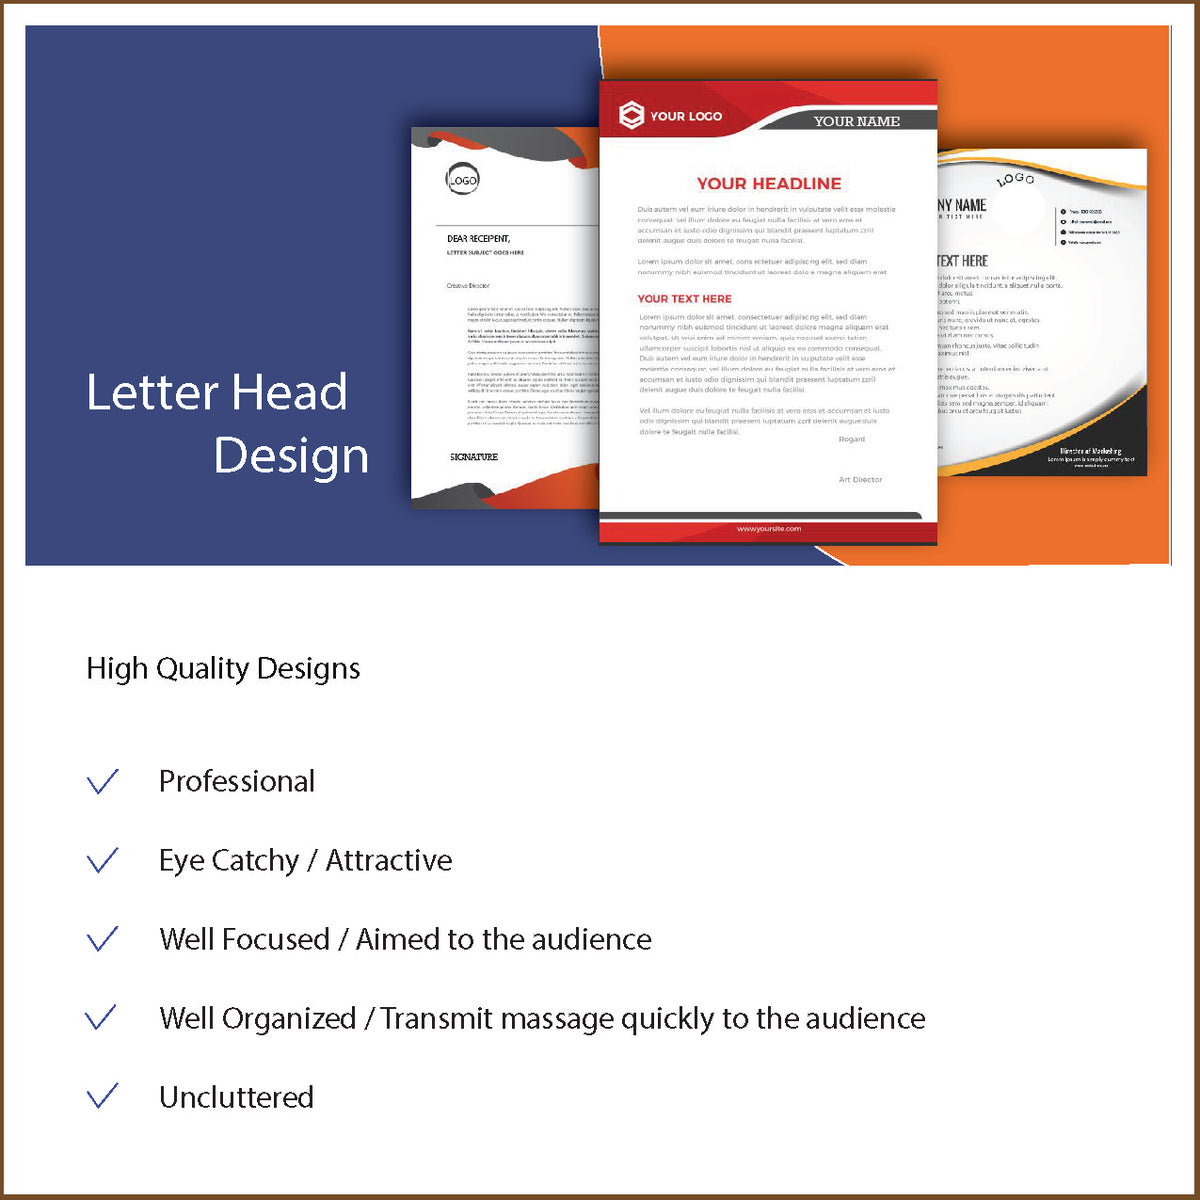 Letter Head Design